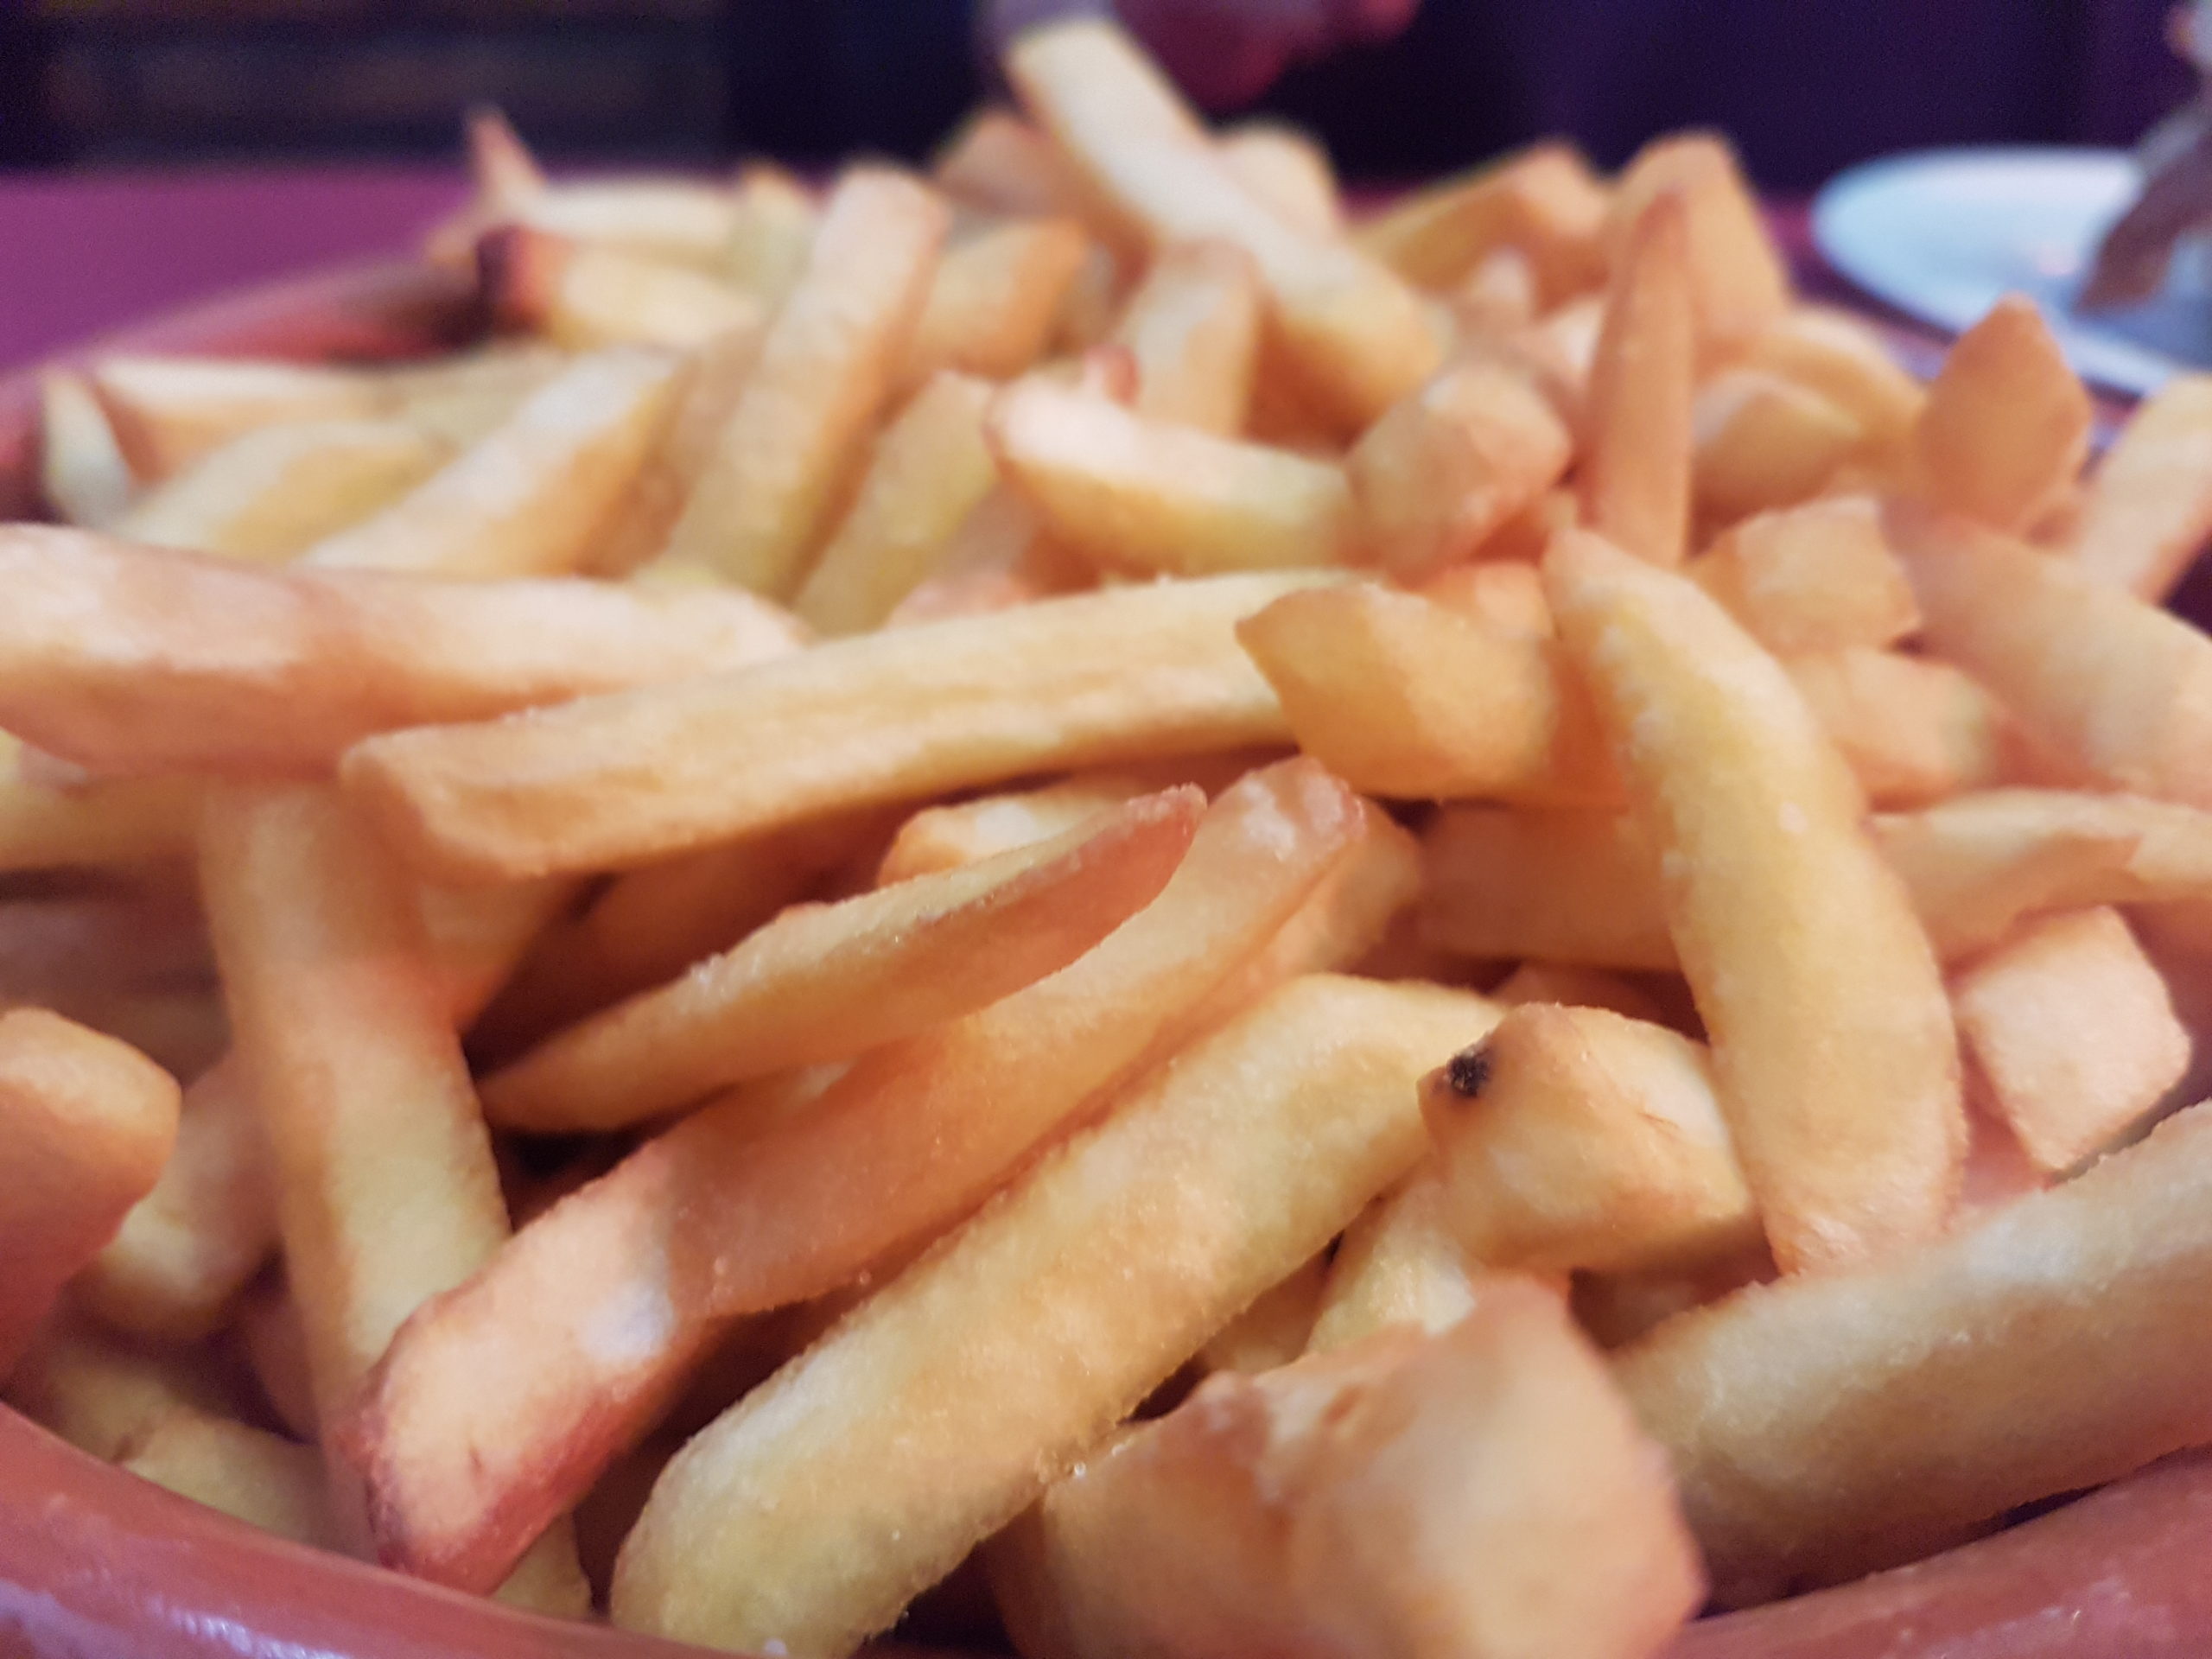 Racion de patatas fritas